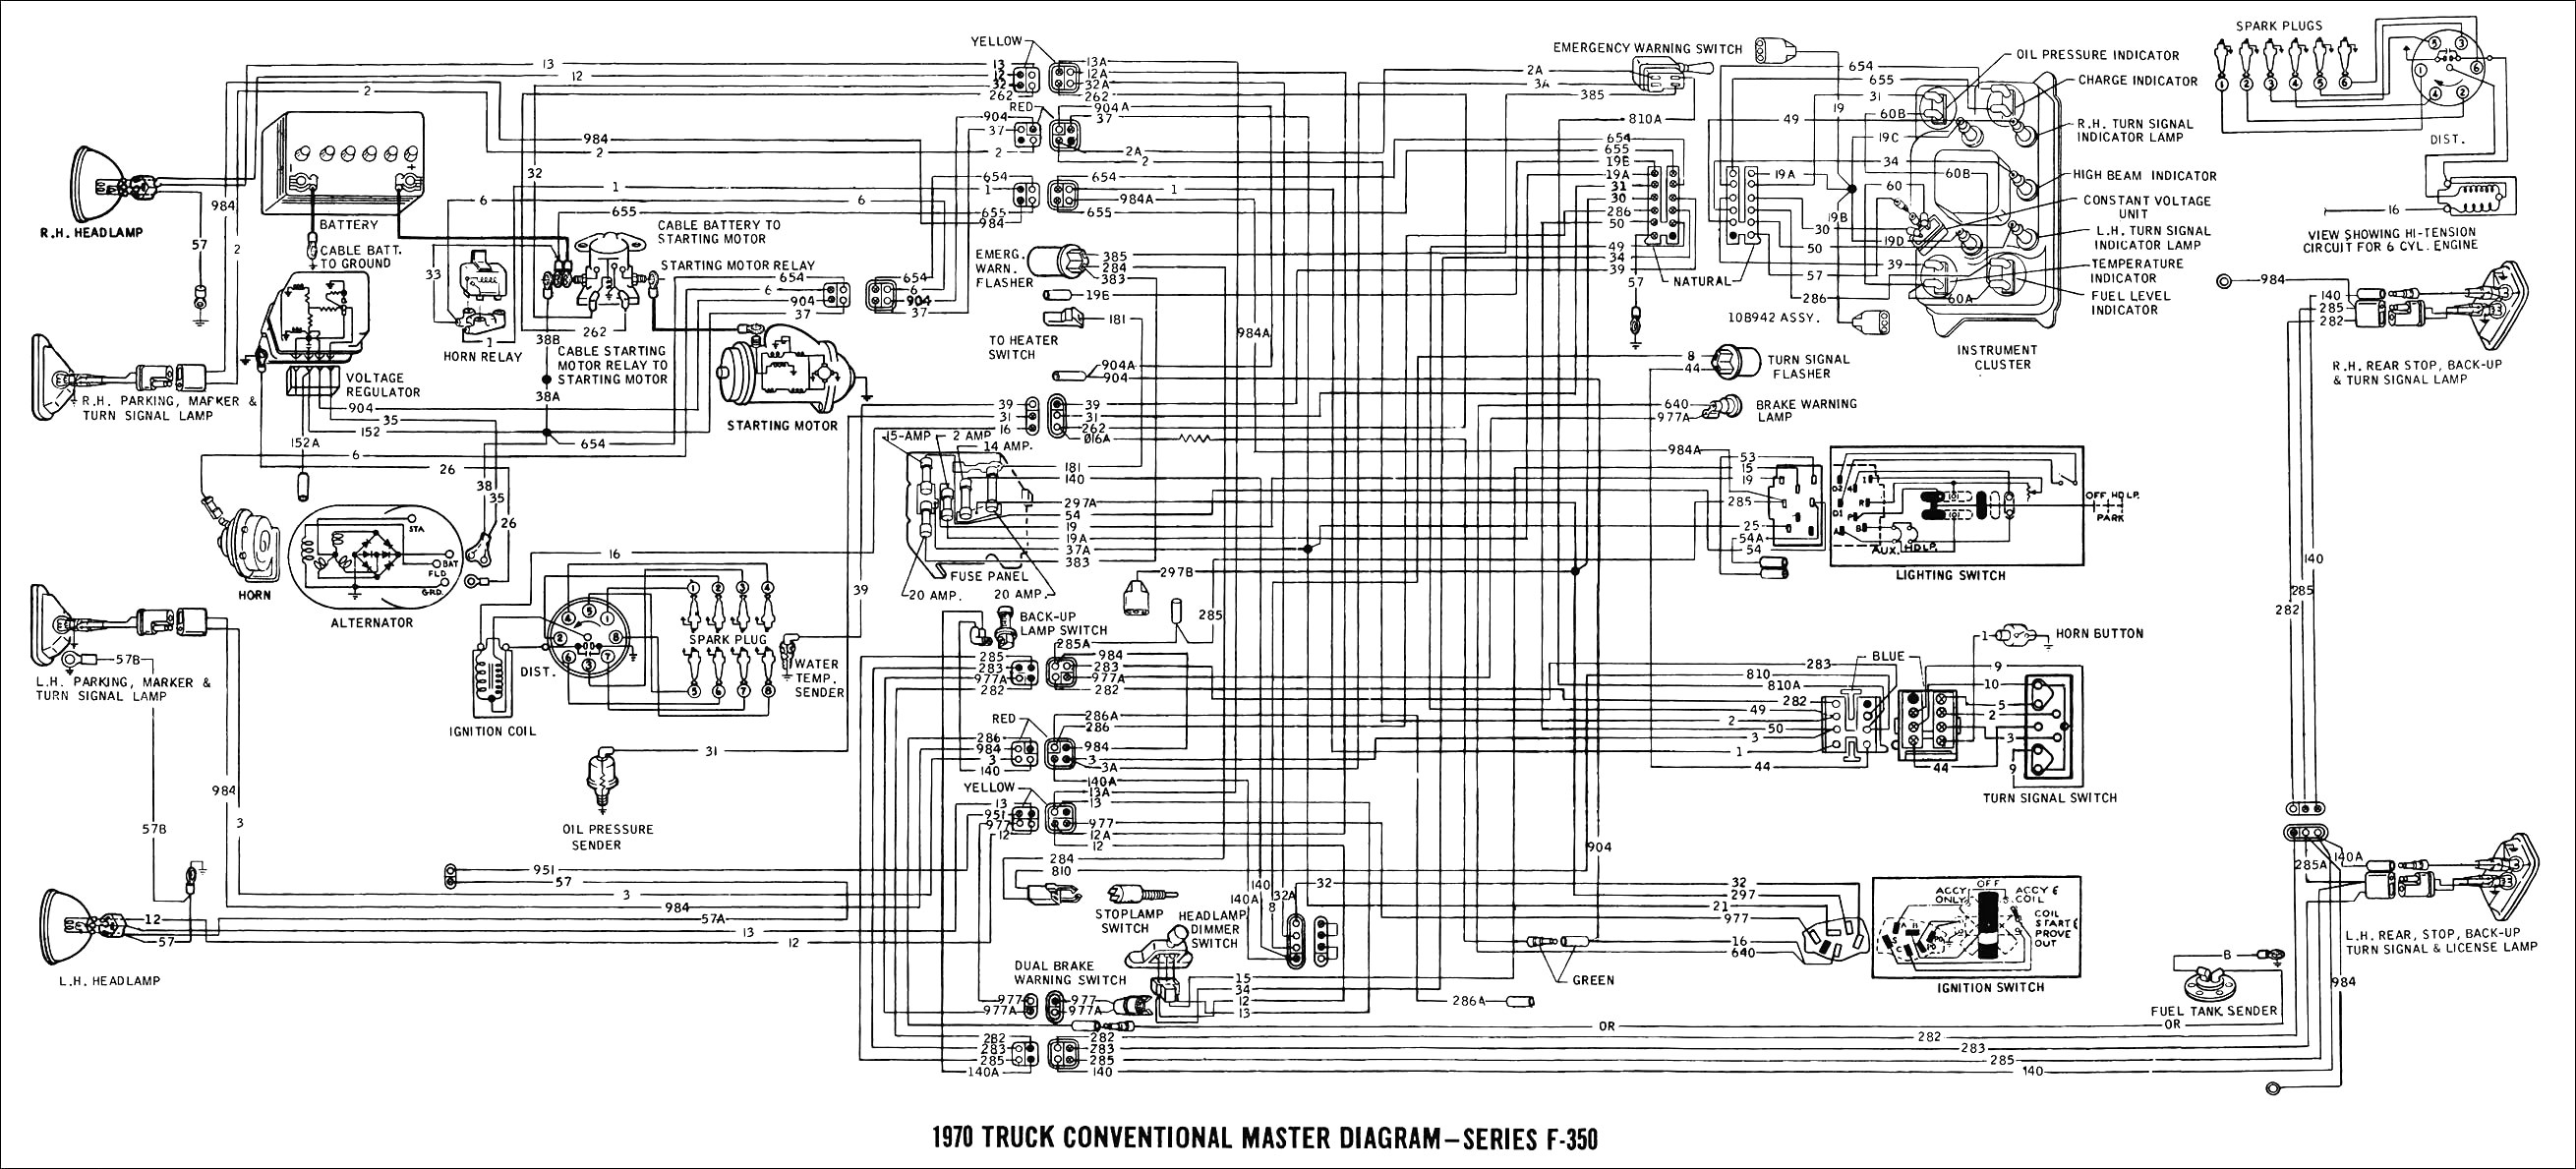 1994 Ford Ranger Wiring Diagram